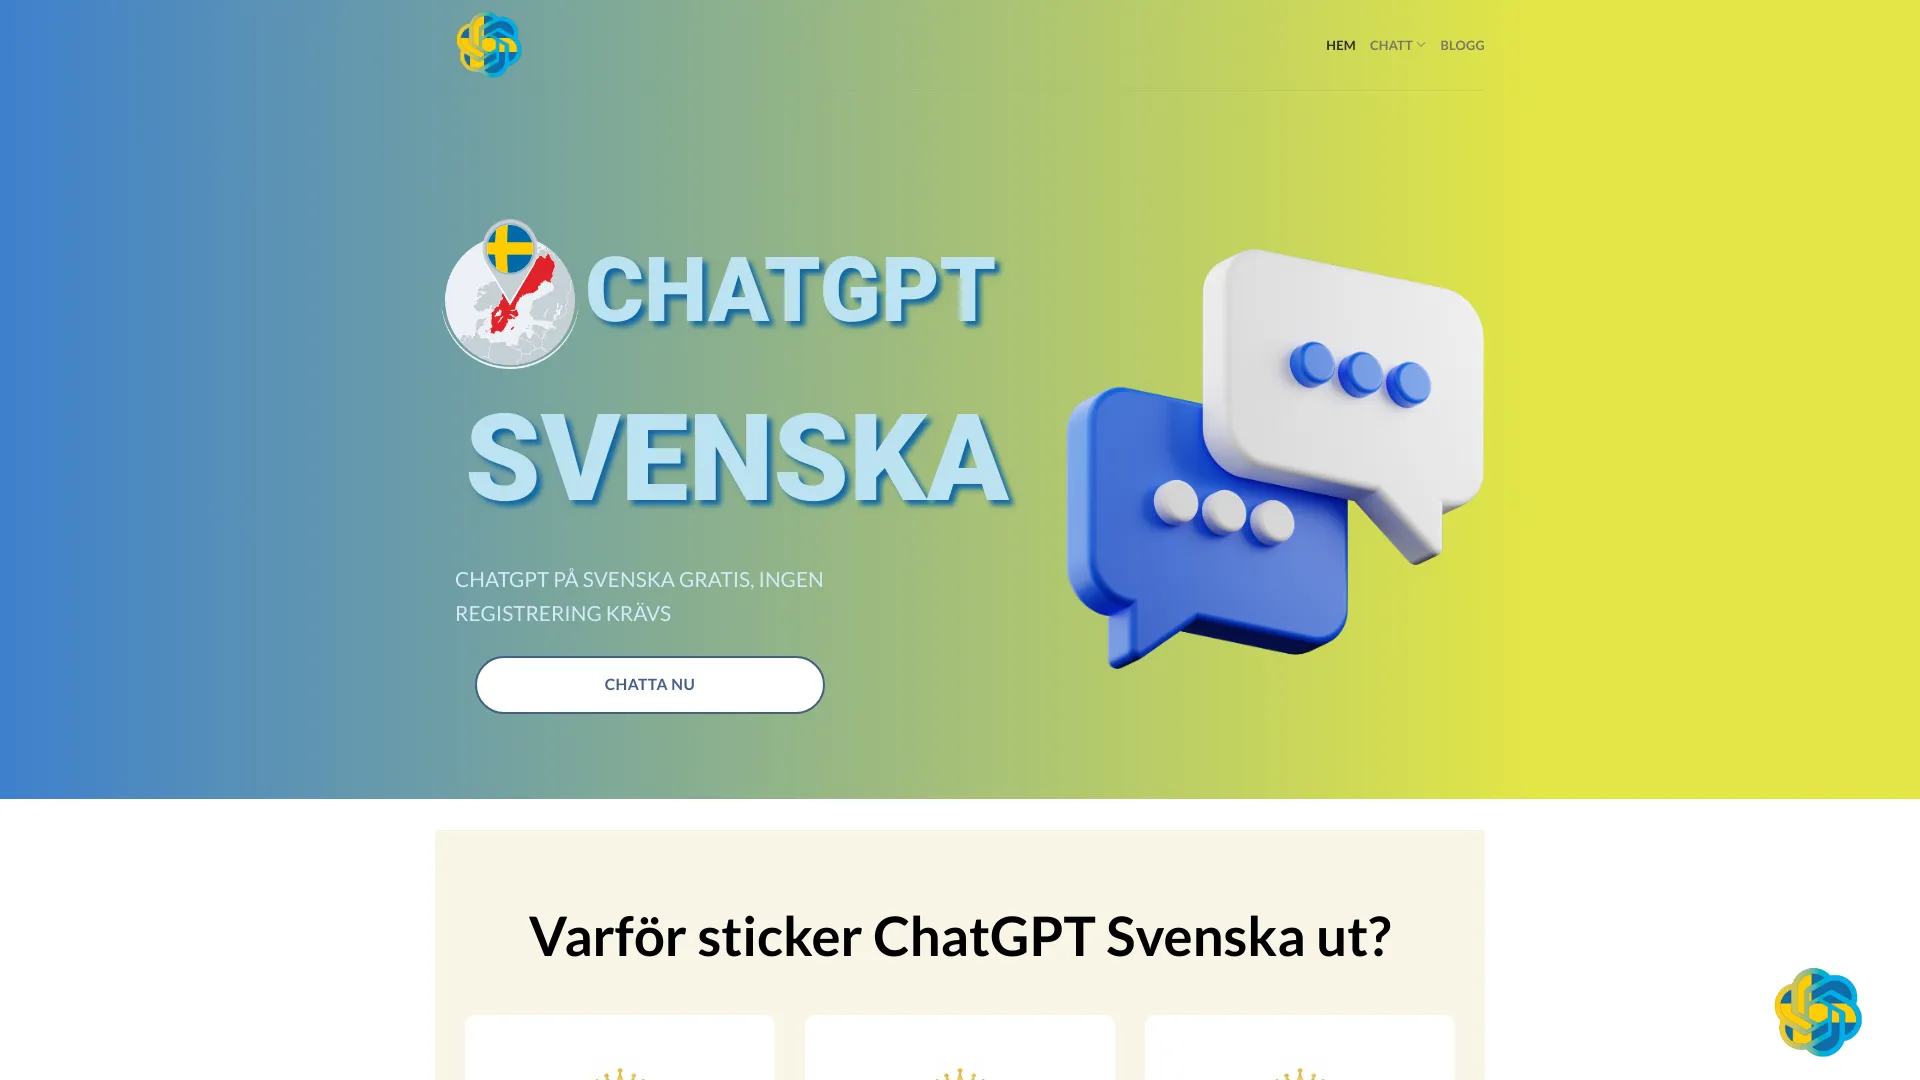 ChatGPT 瑞典語